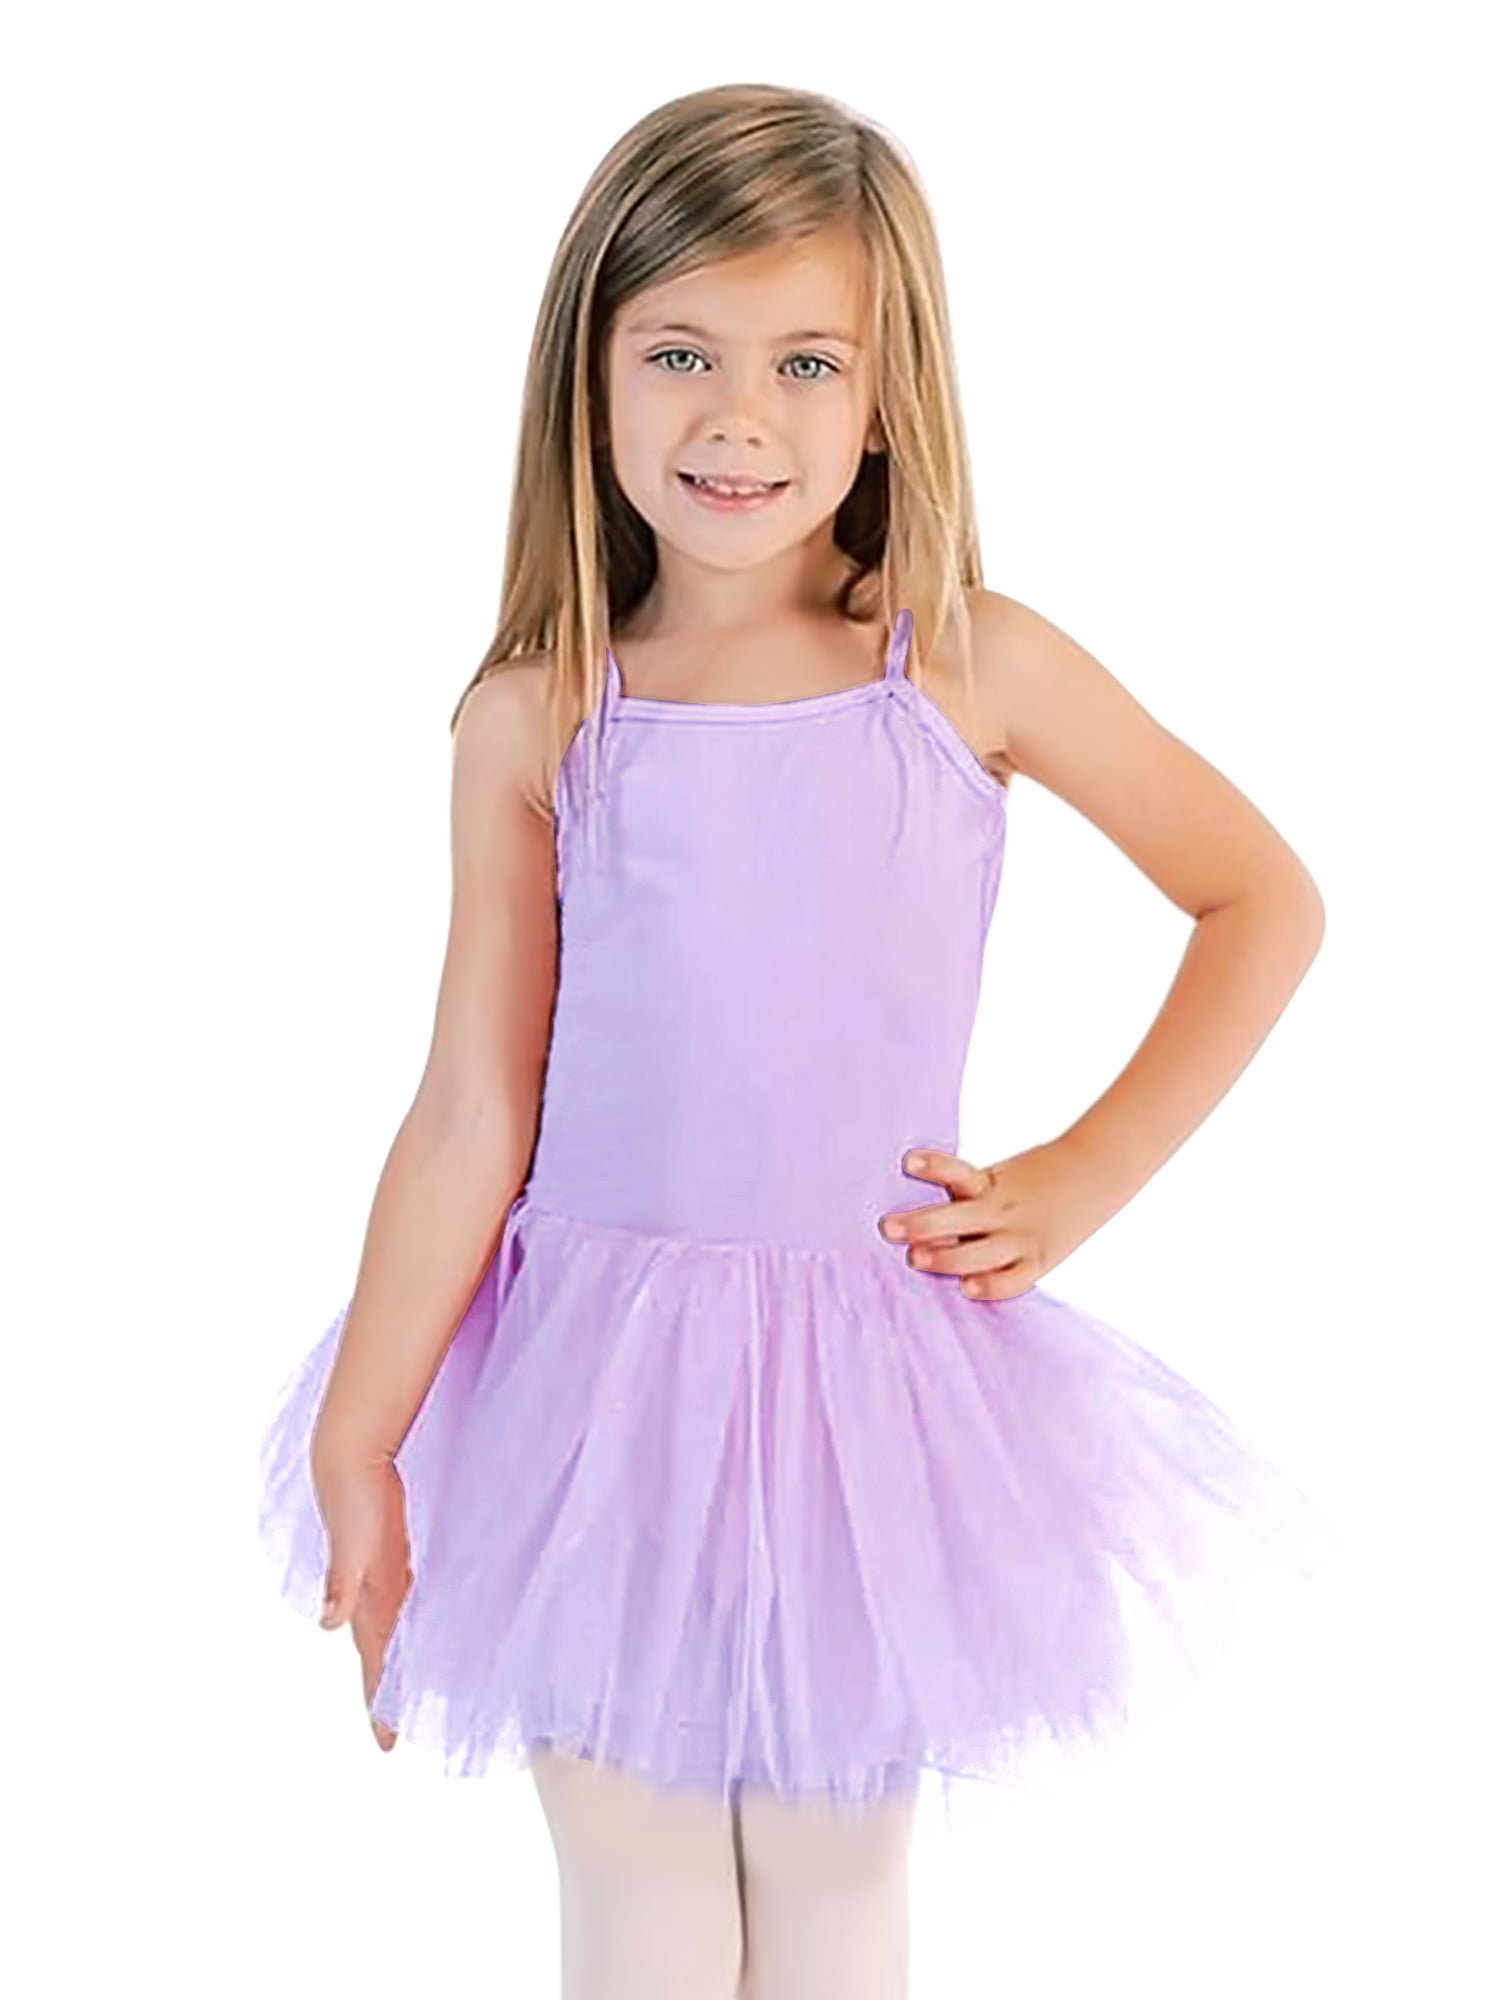 Shiny Mermaid Scale Ballet Tutu Dress for Girls Ruffle Flutter Sleeve Skirt Leotard Ballerina Dancewear Costume 2-7Y 